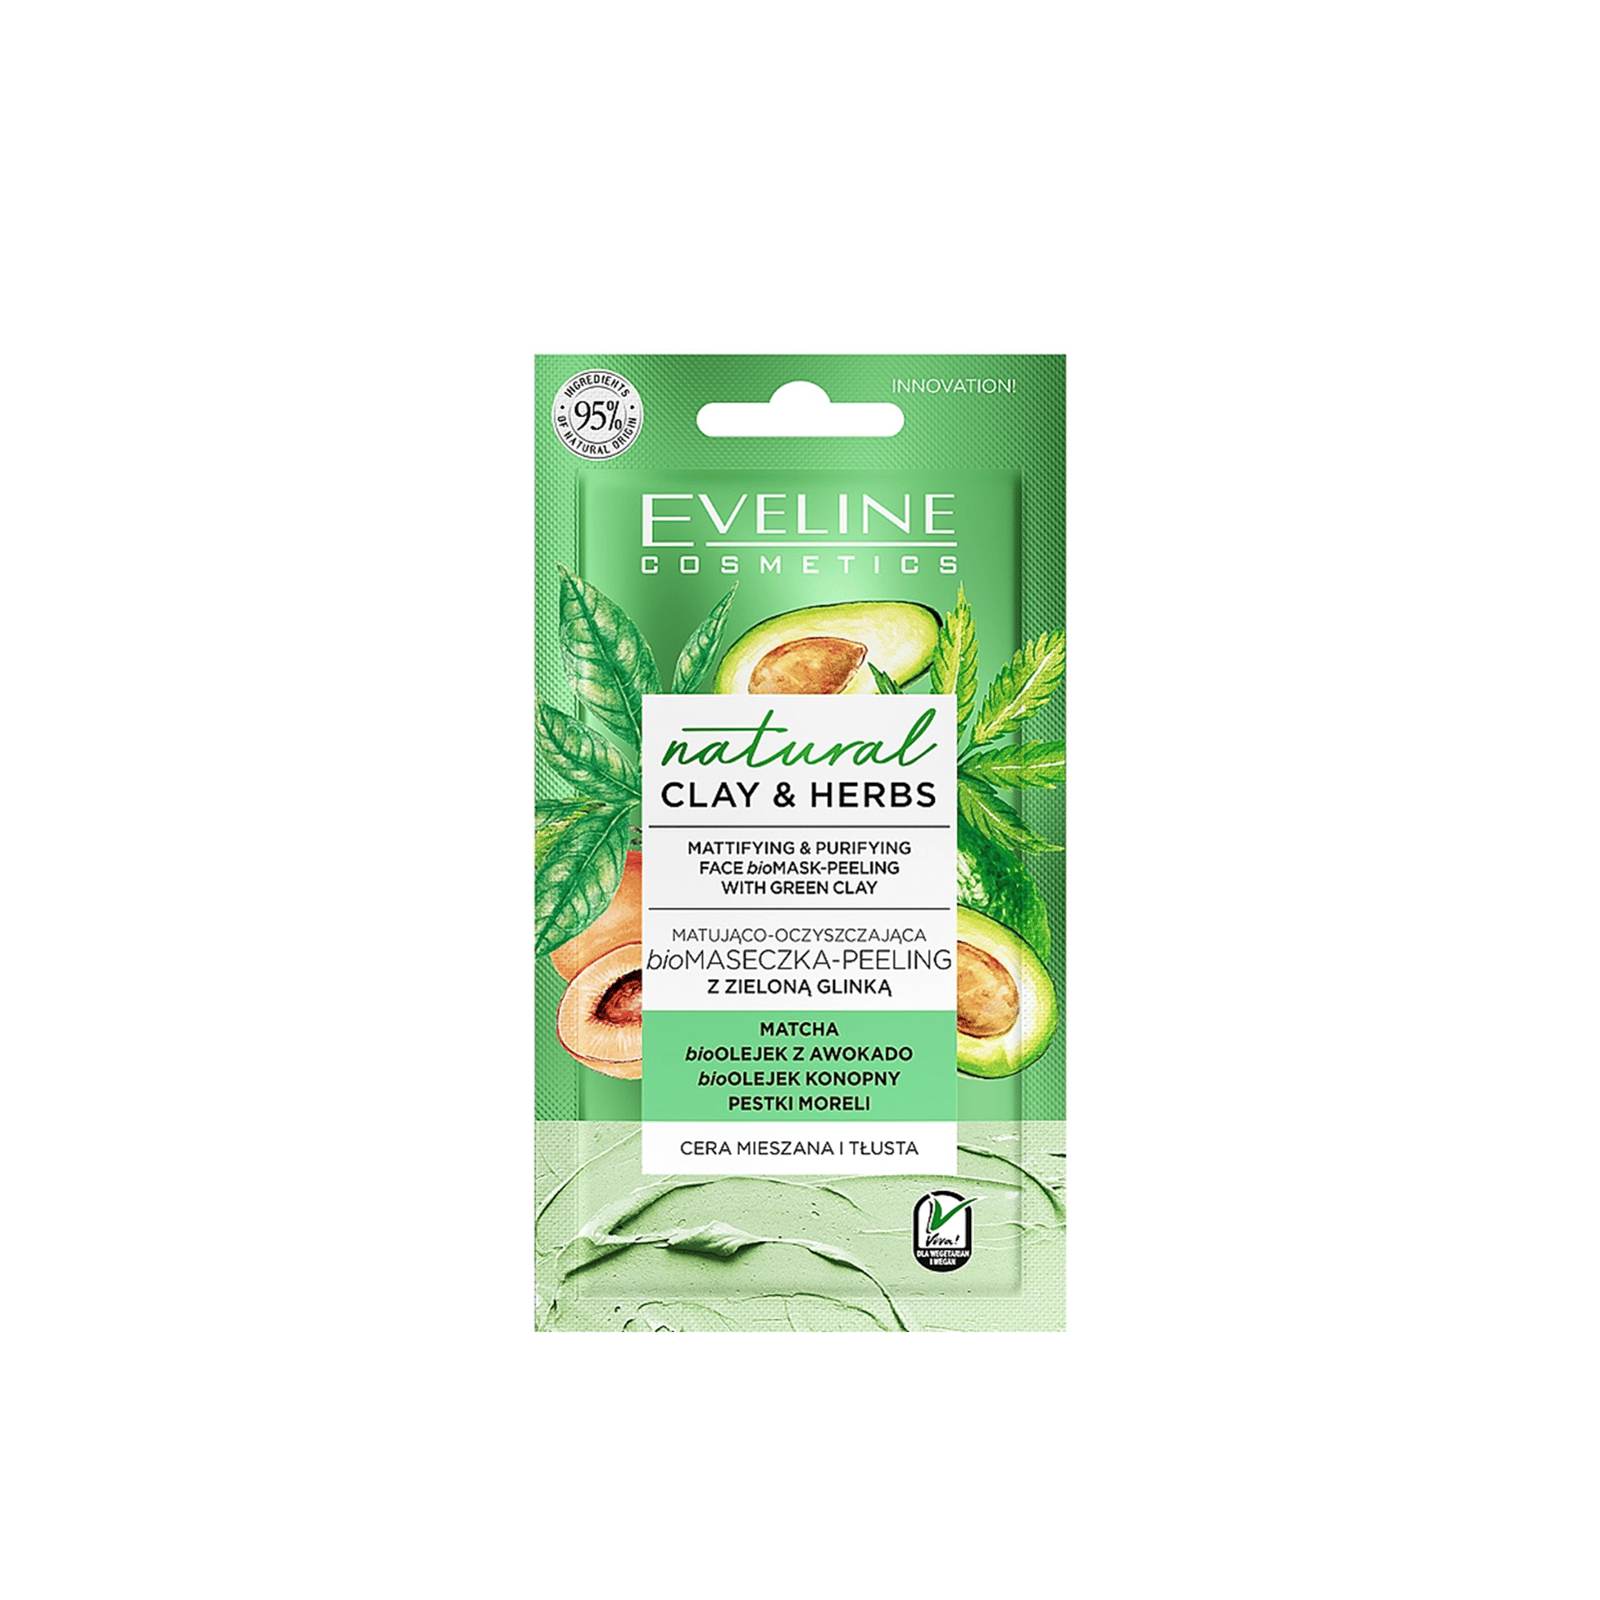 Eveline Cosmetics Natural Clay & Herbs Mattifying & Purifying Bio-Mask 8ml (0.28 fl oz)